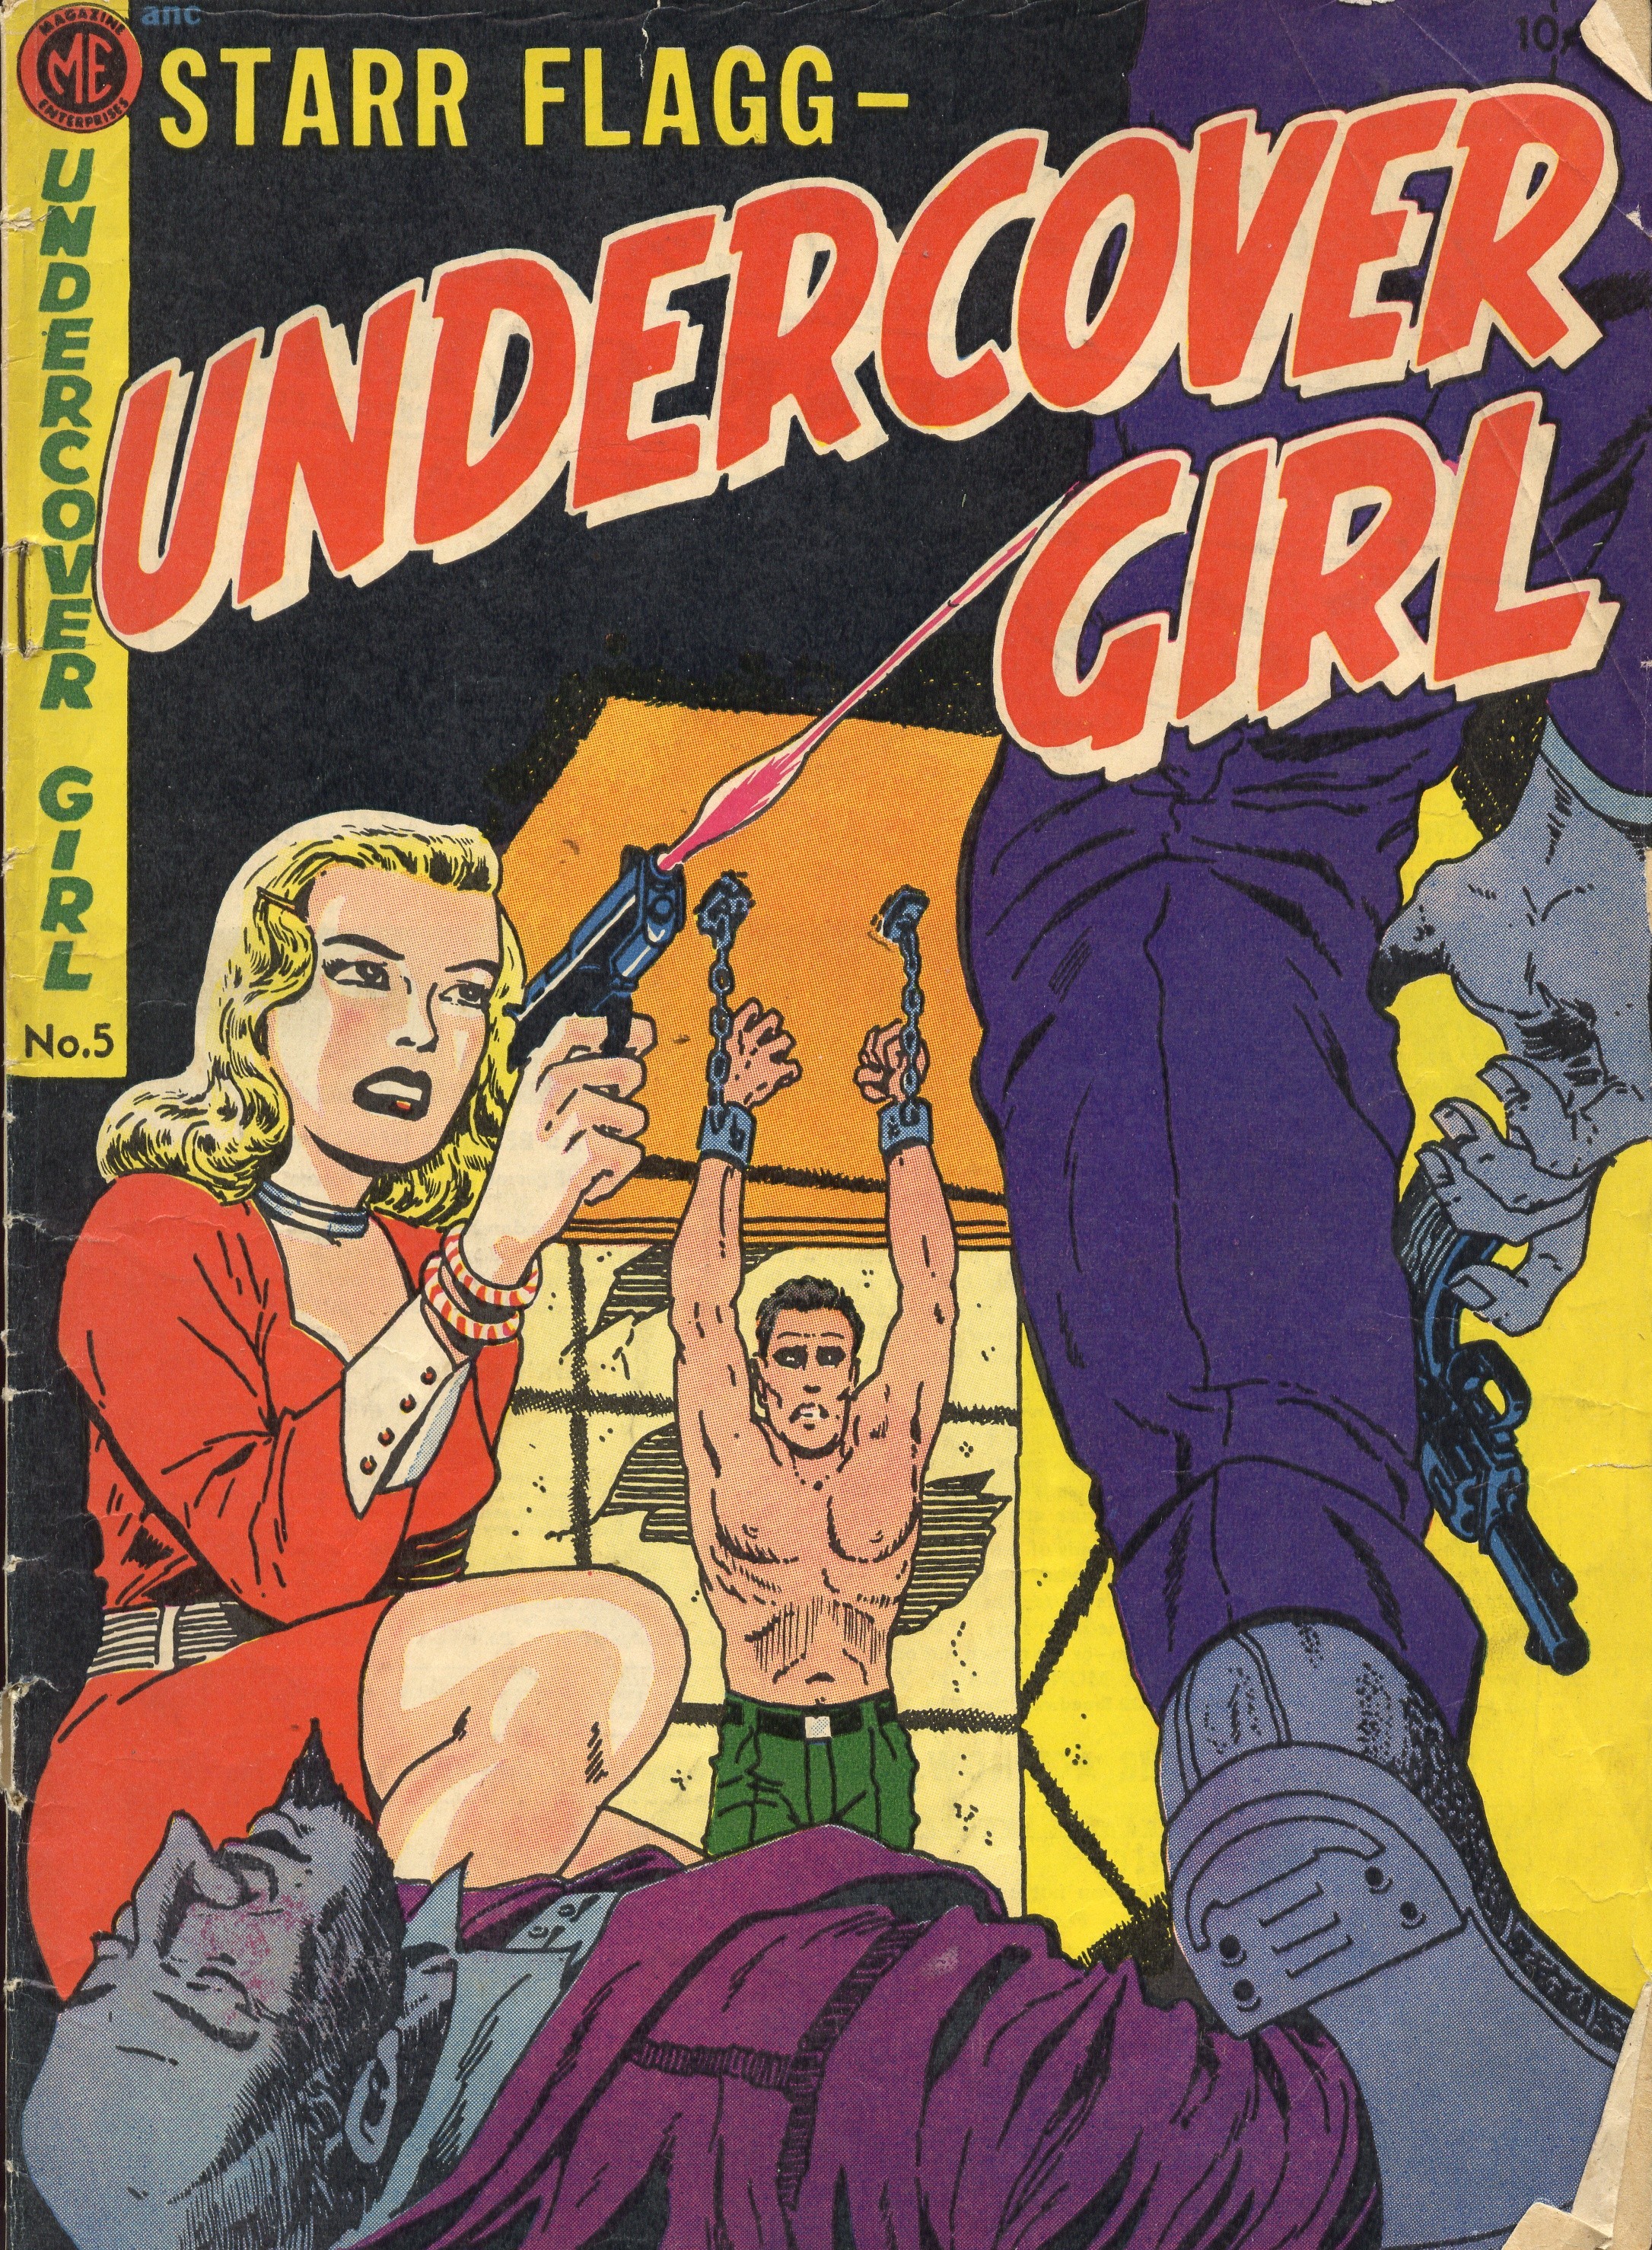 Undercover Girl #5 by Magazine Enterprises